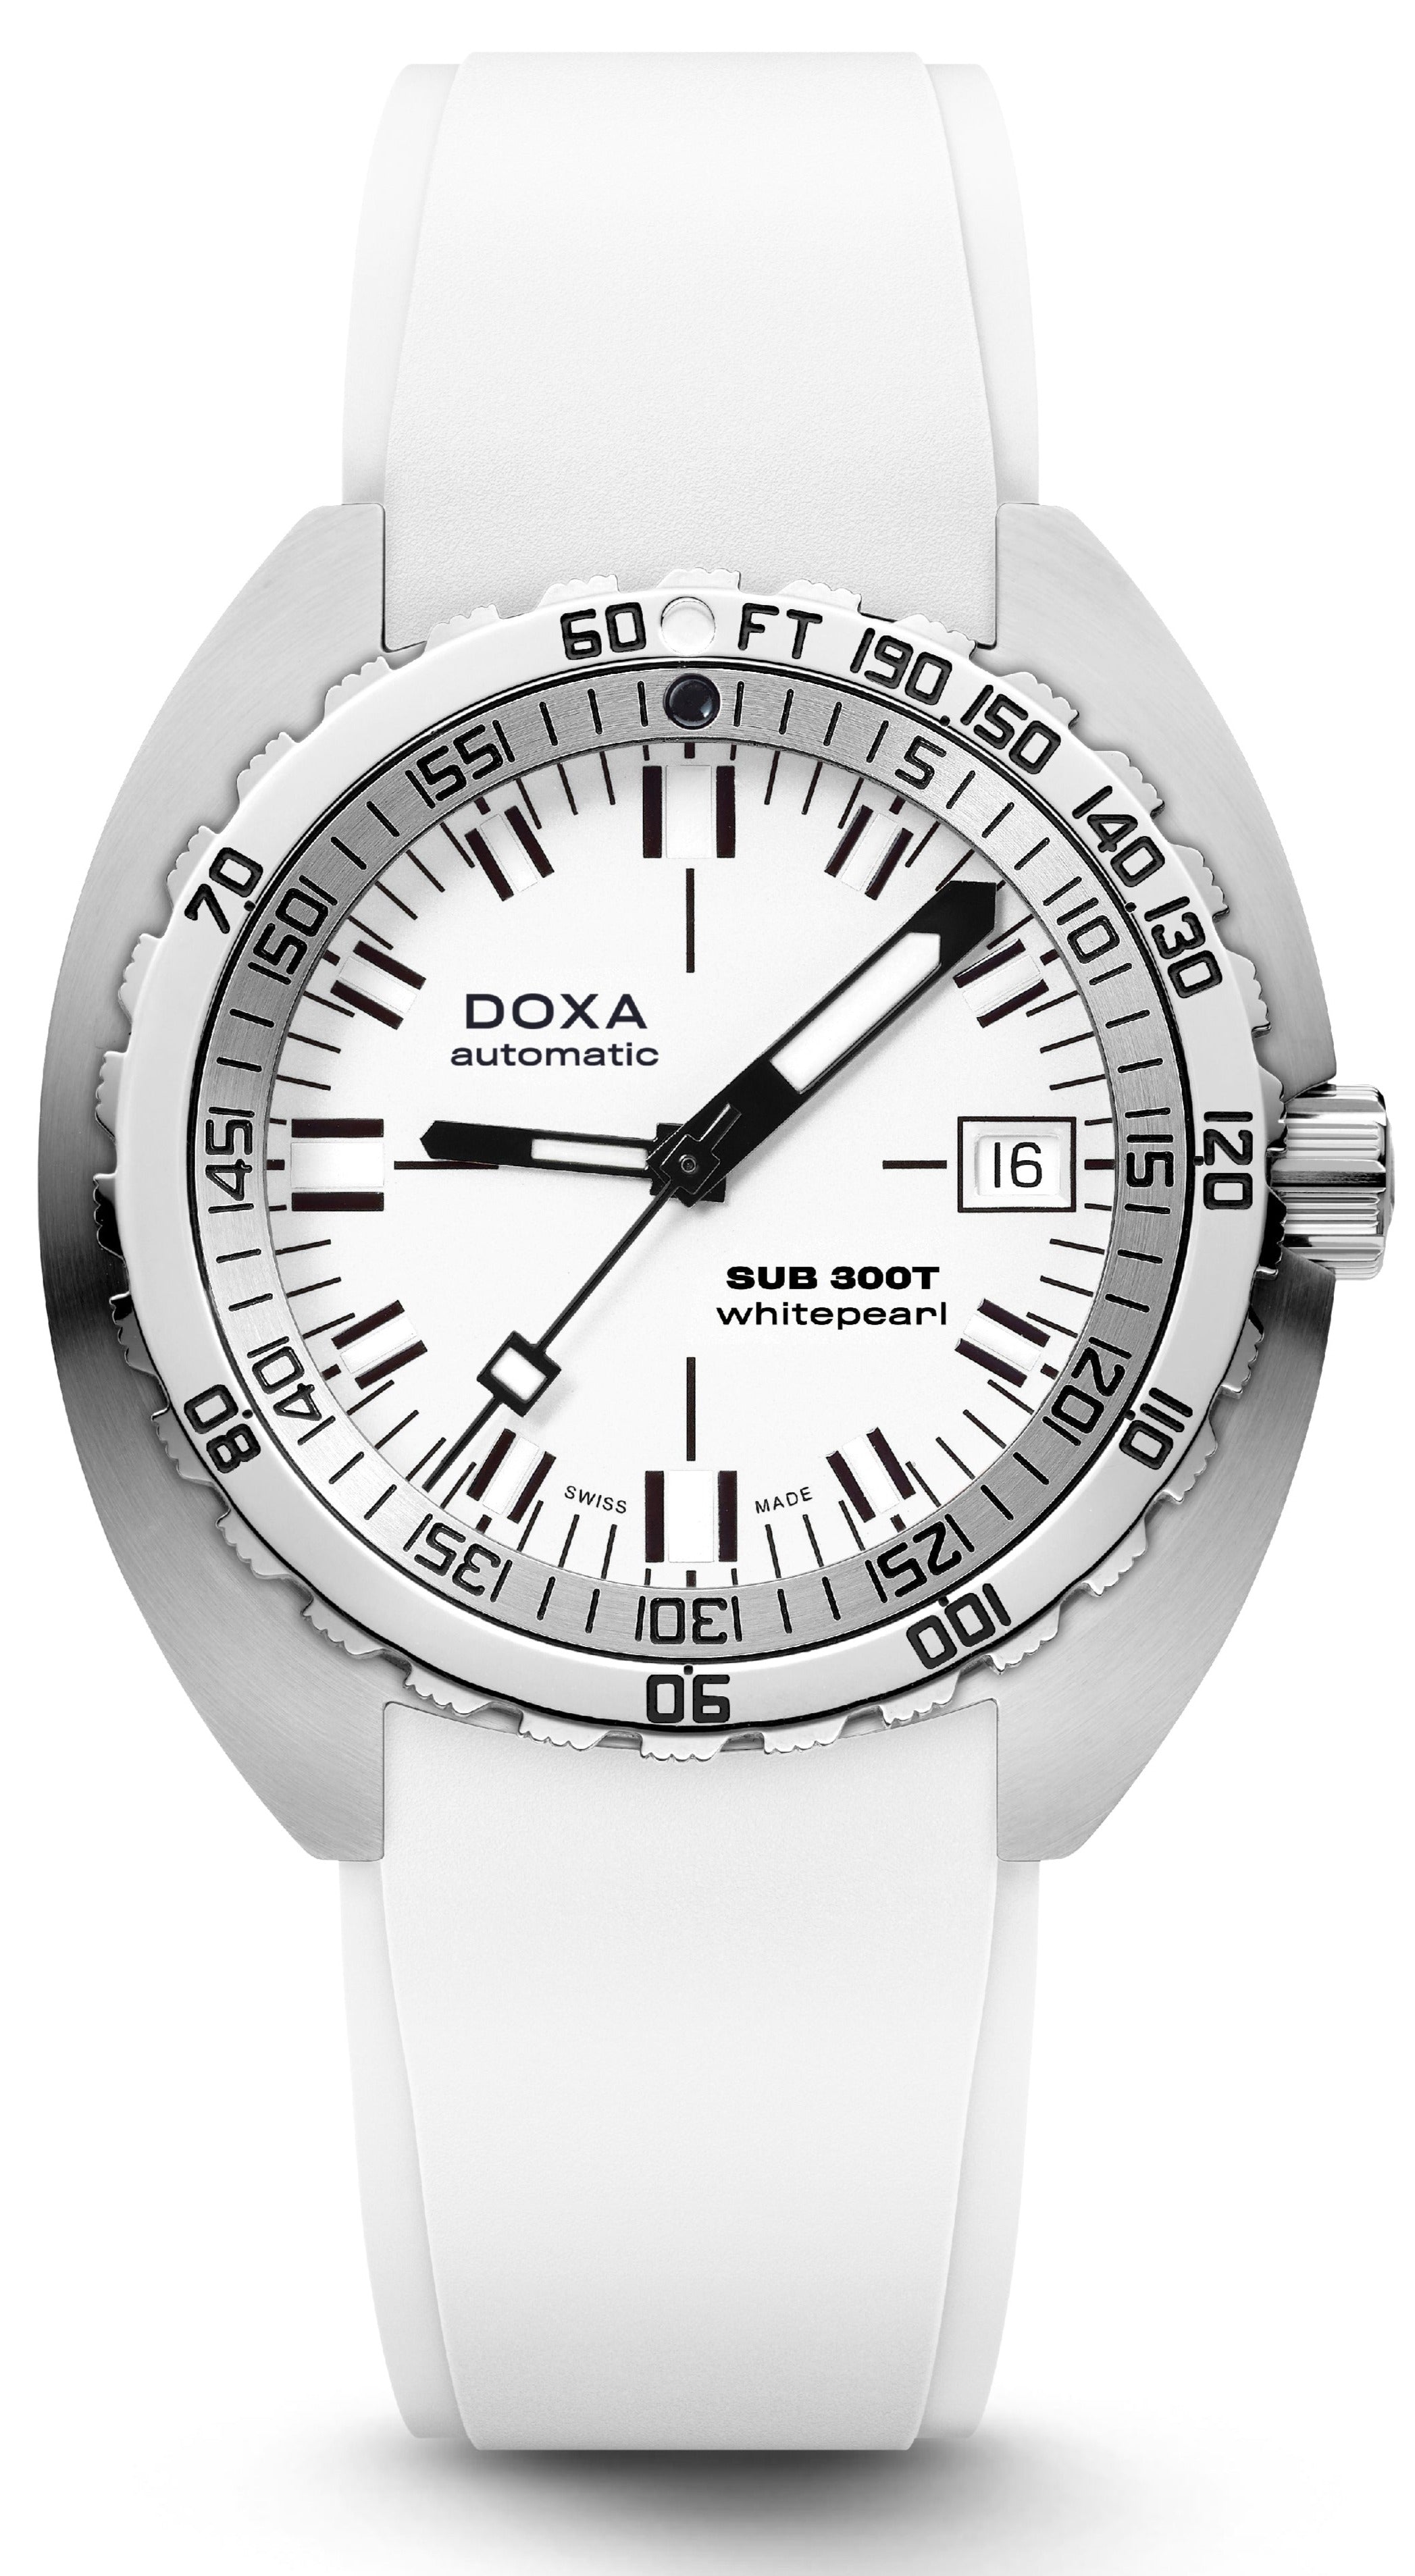 Photos - Wrist Watch DOXA Watch SUB 300T Whitepearl Rubber - White DOX-144 